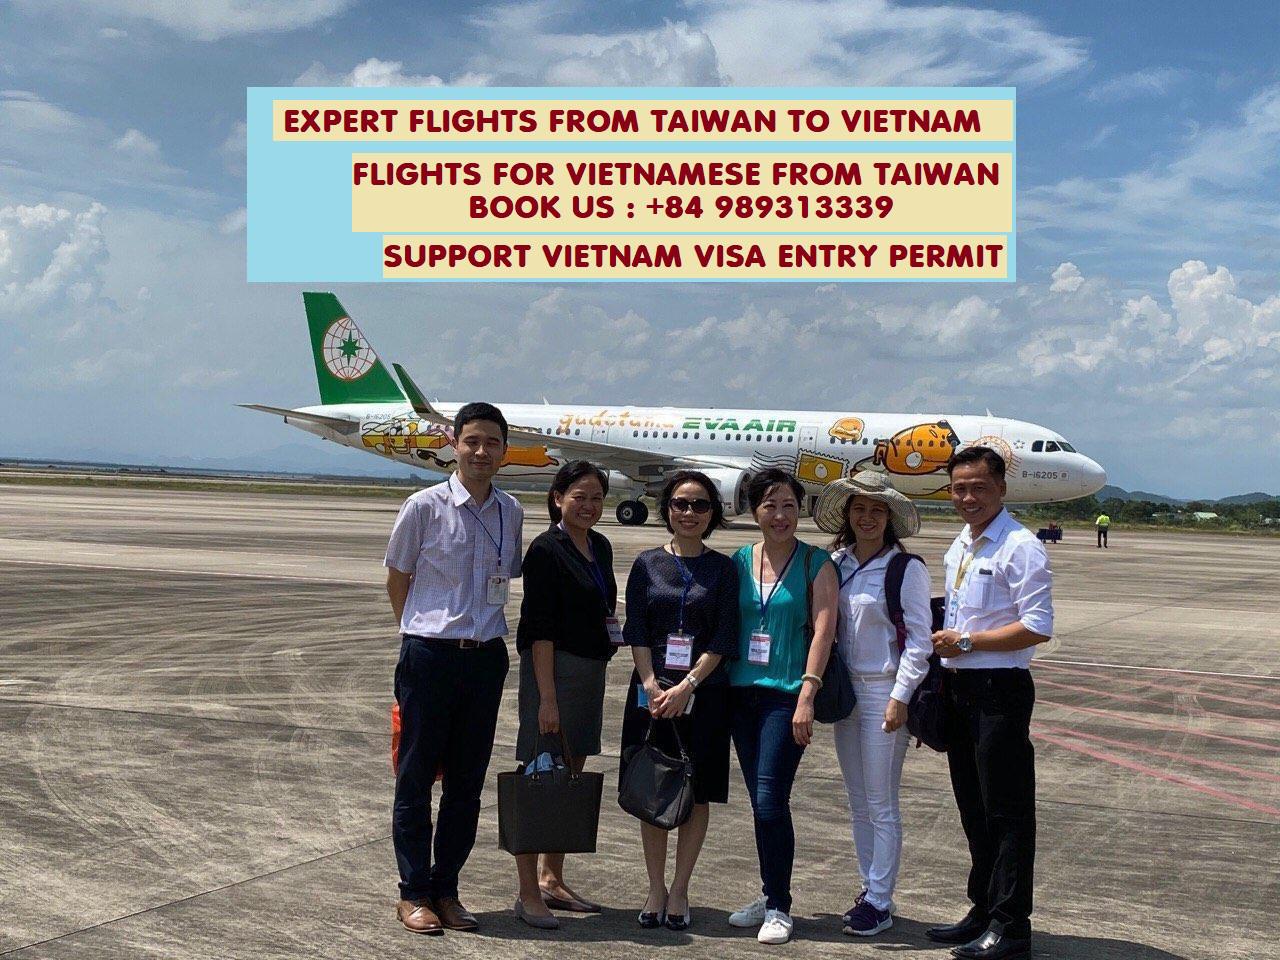 Update flights for Vietnamese from Taiwan to Vietnam